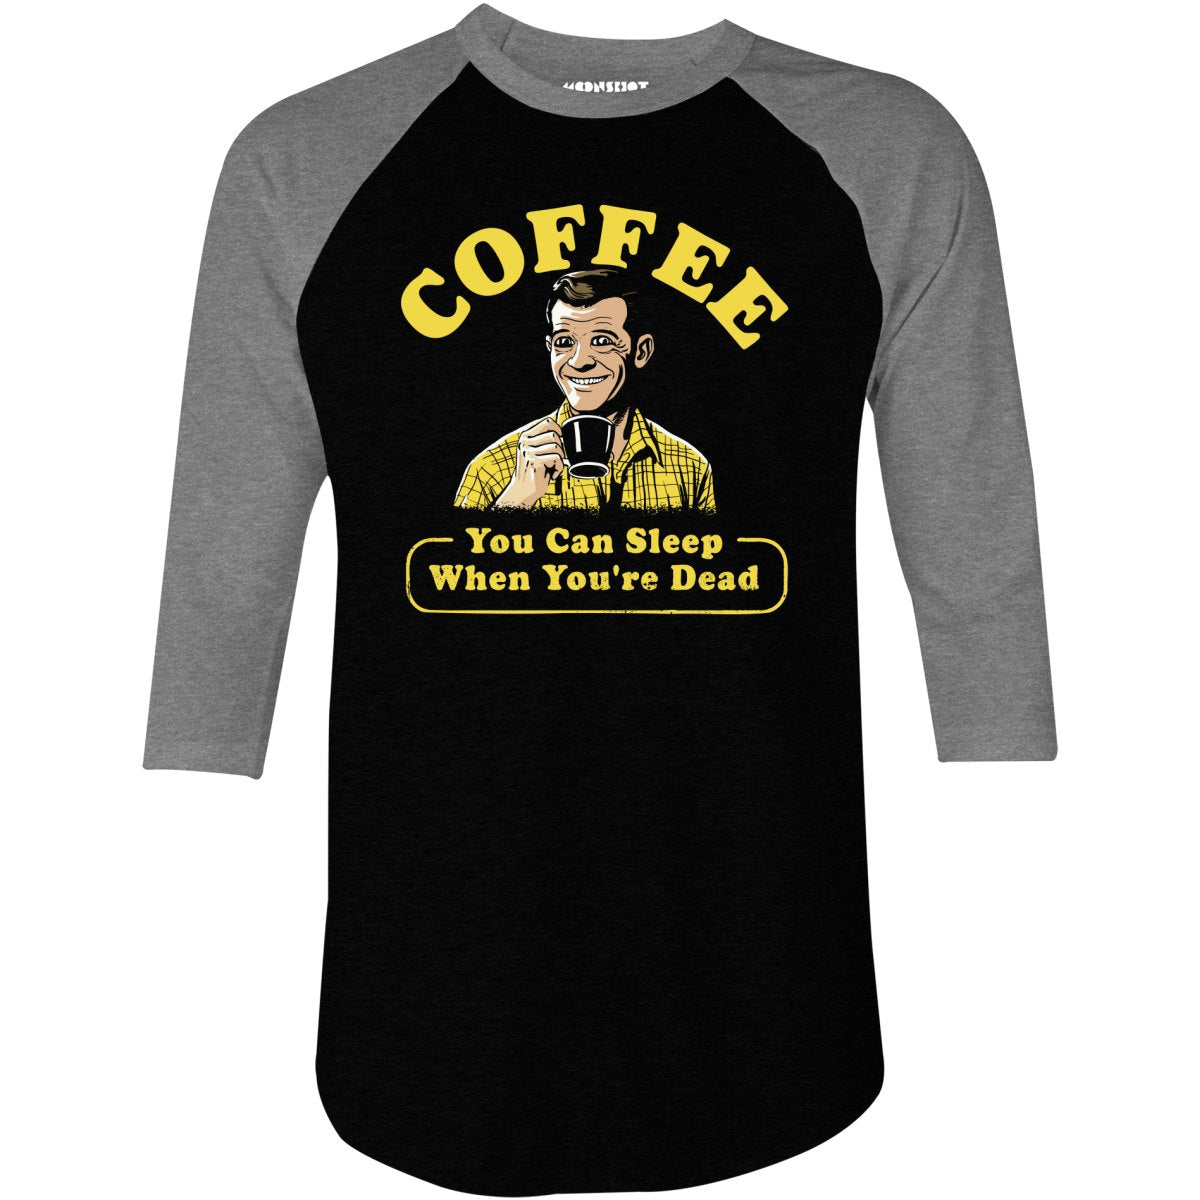 Coffee - You Can Sleep When You're Dead - 3/4 Sleeve Raglan T-Shirt